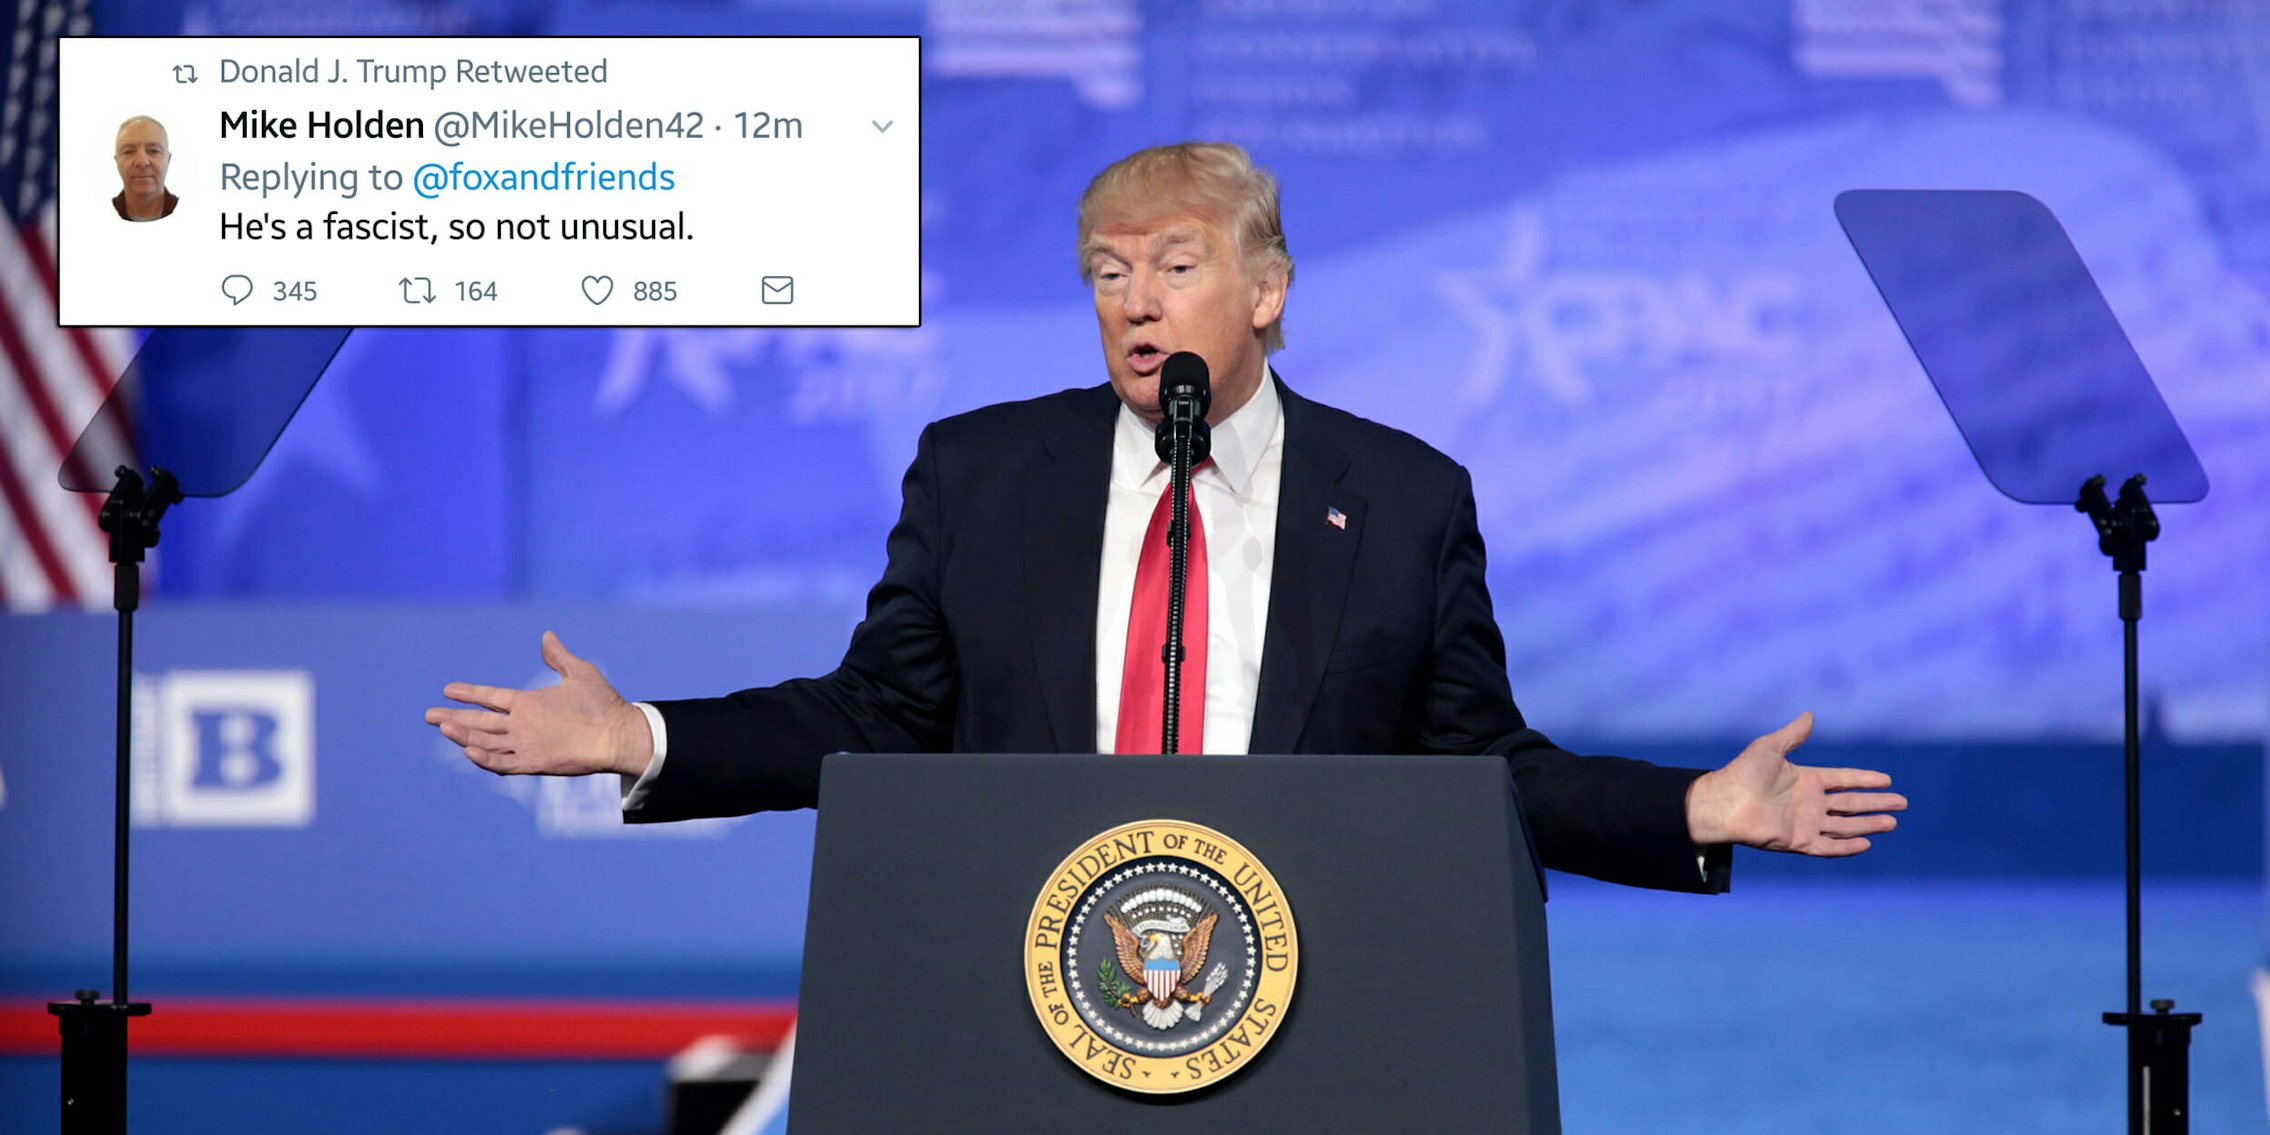 Donald Trump retweeted someone calling him a fascist.